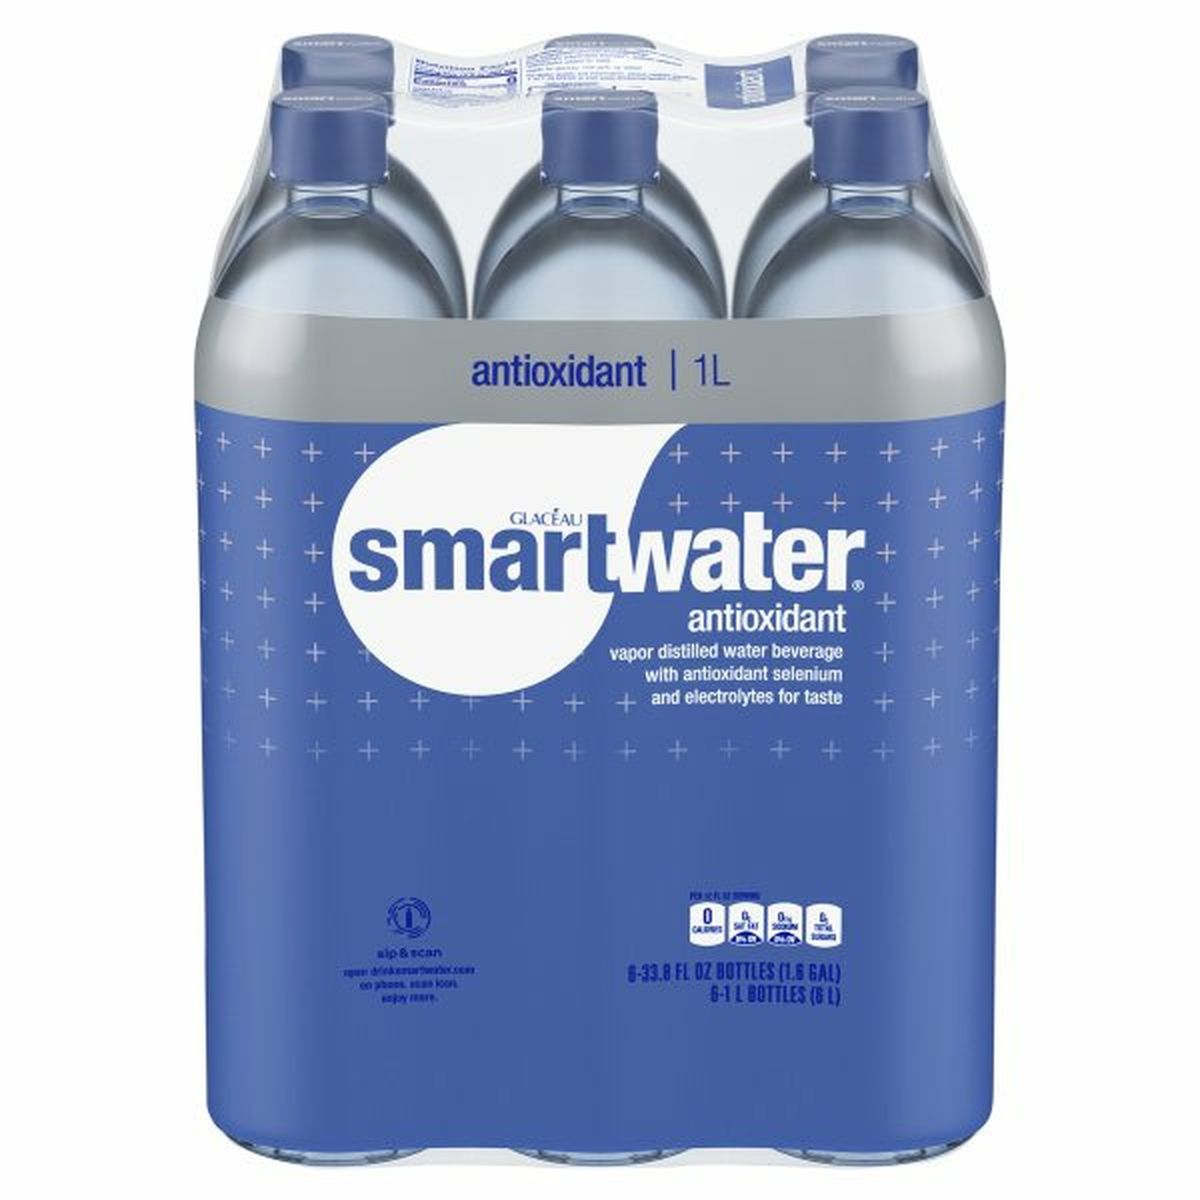 Calories in Smartwater Antioxidant Water, Vapor Distilled, 1 Liter